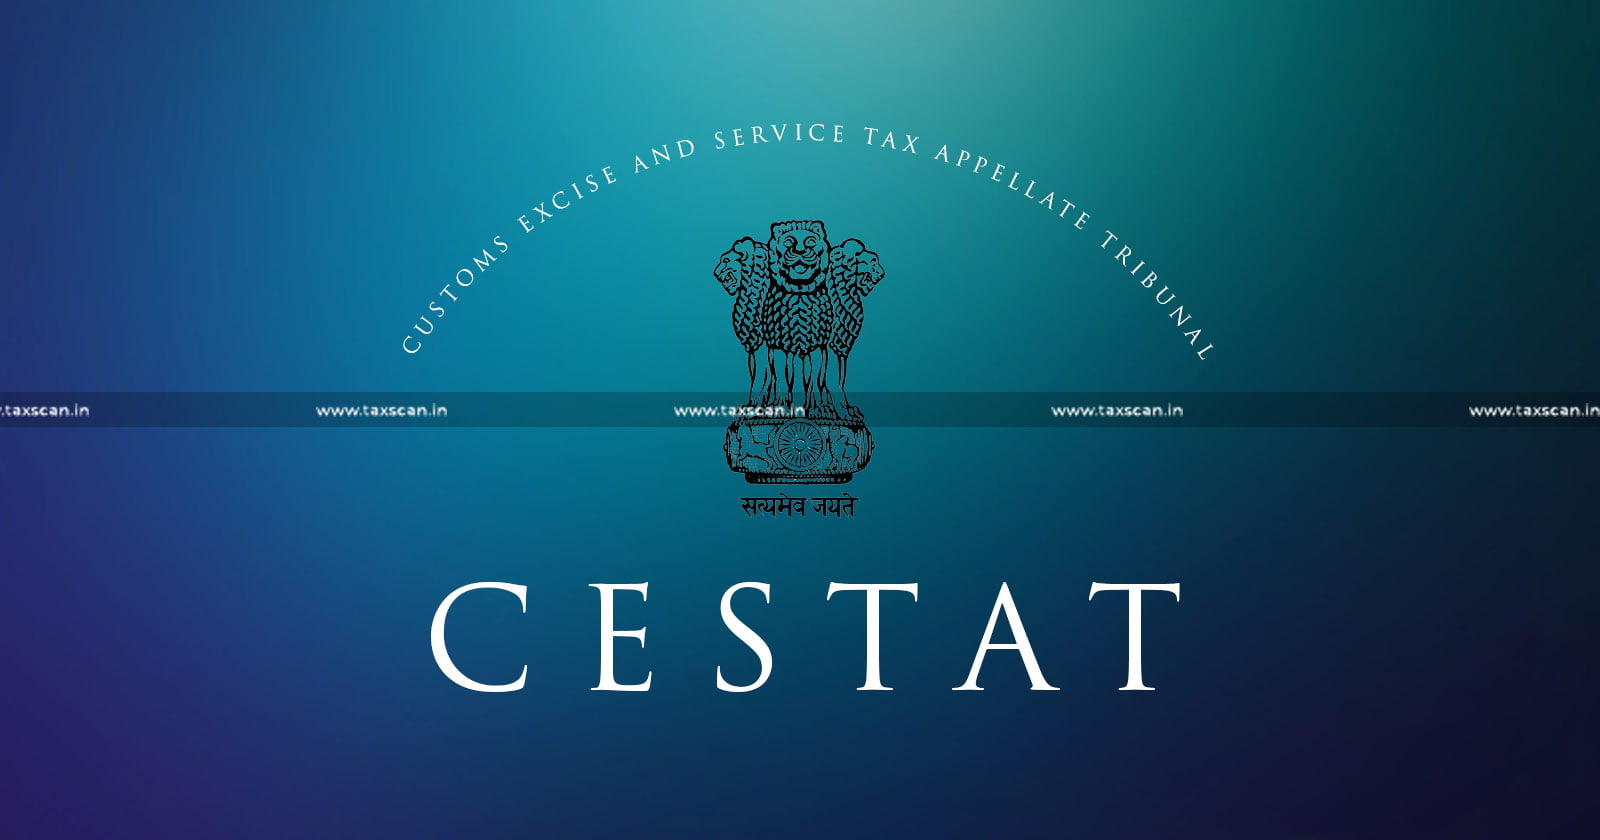 CESTAT - CENVAT Credit - Service Tax - CCR - TAXSCAN